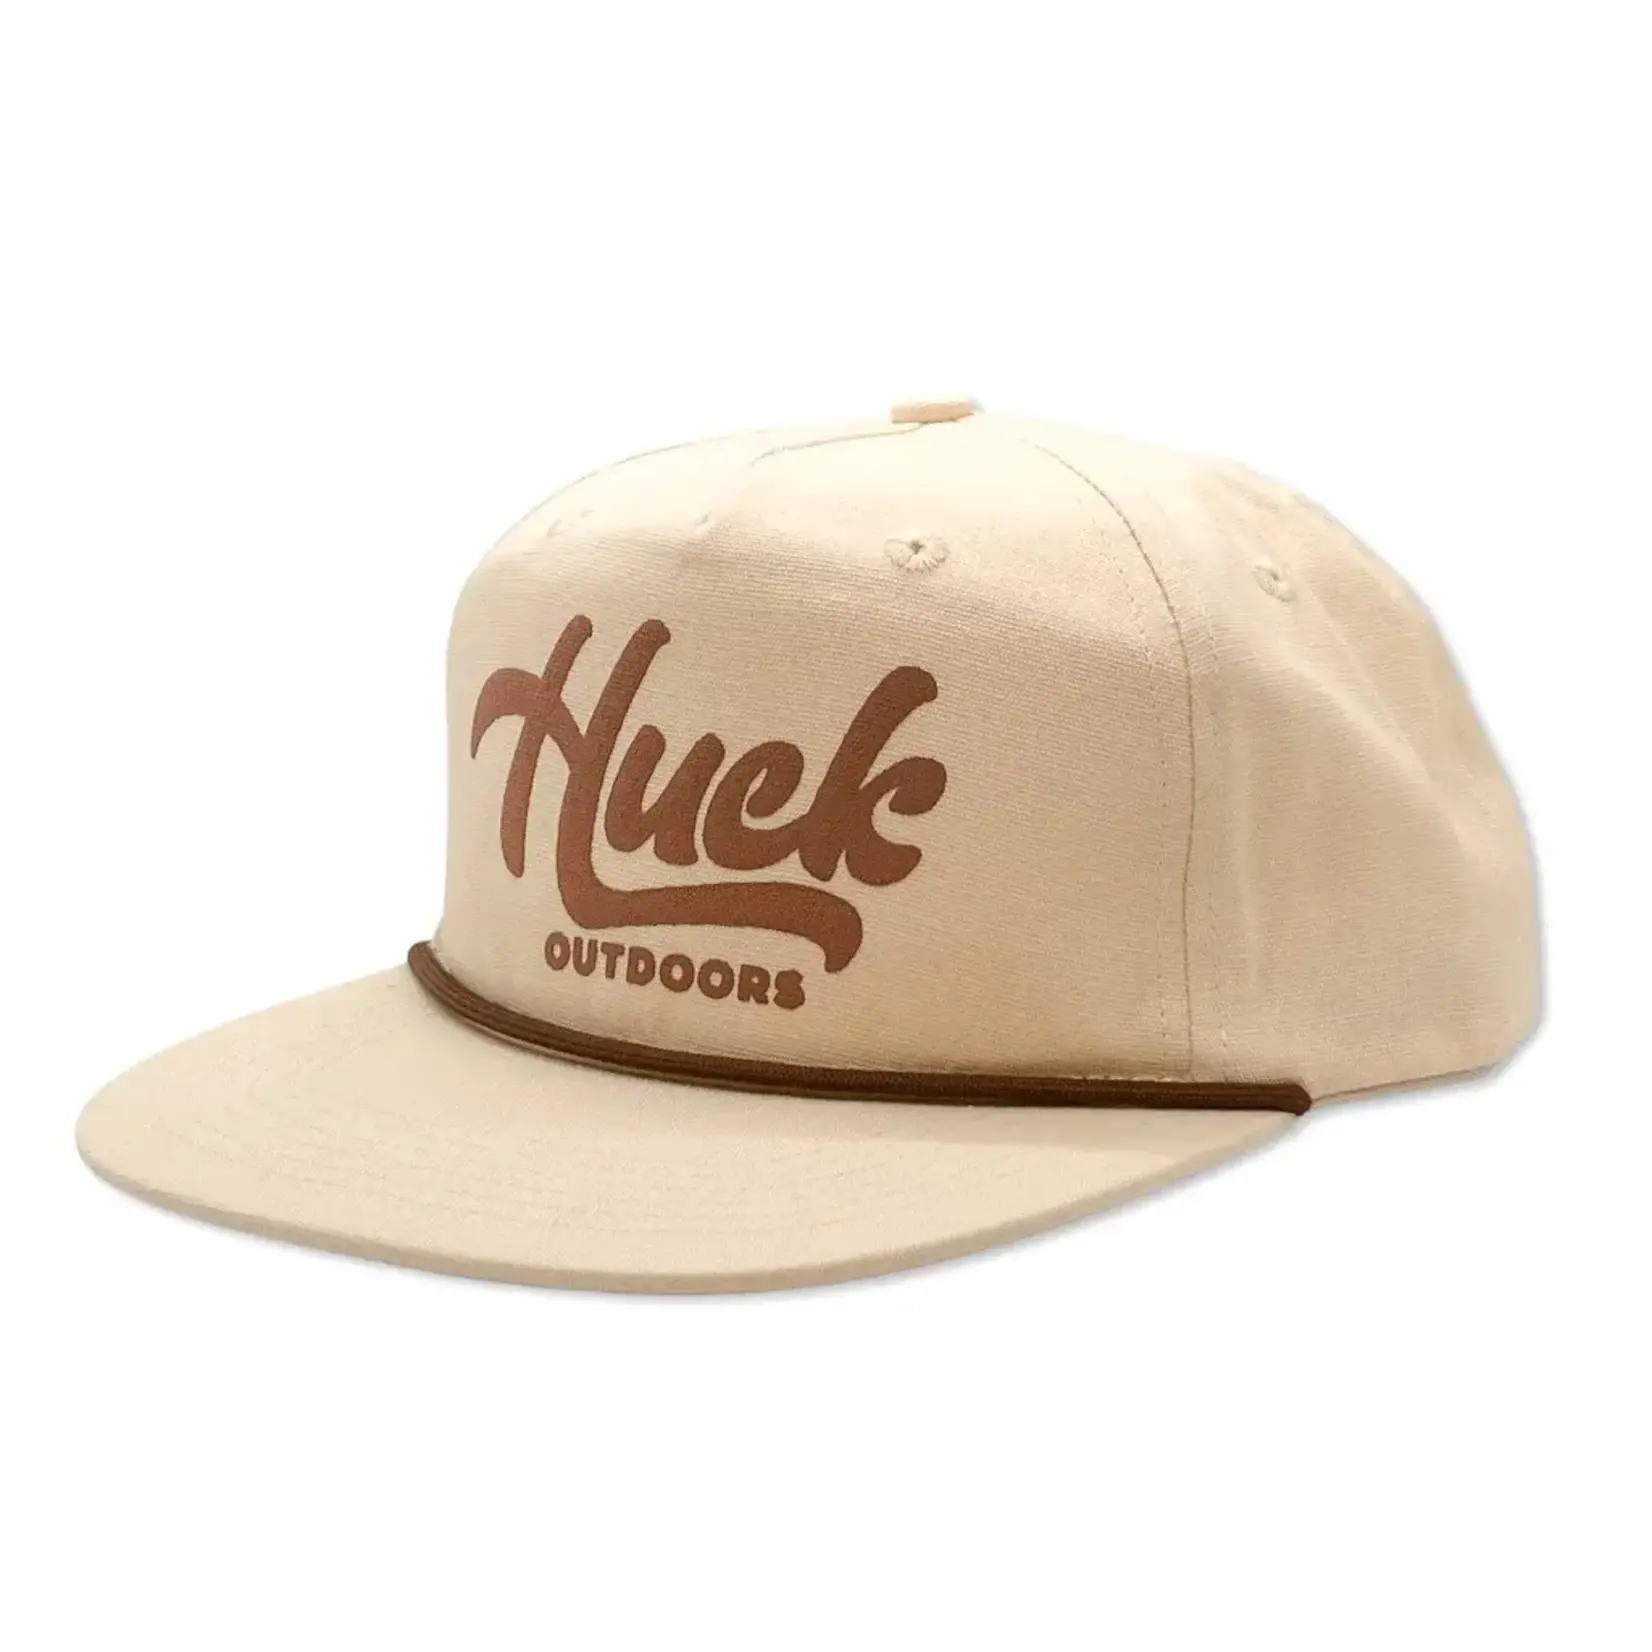 Huck Outdoors Huck Outdoors Retro Rope Snapback Hat